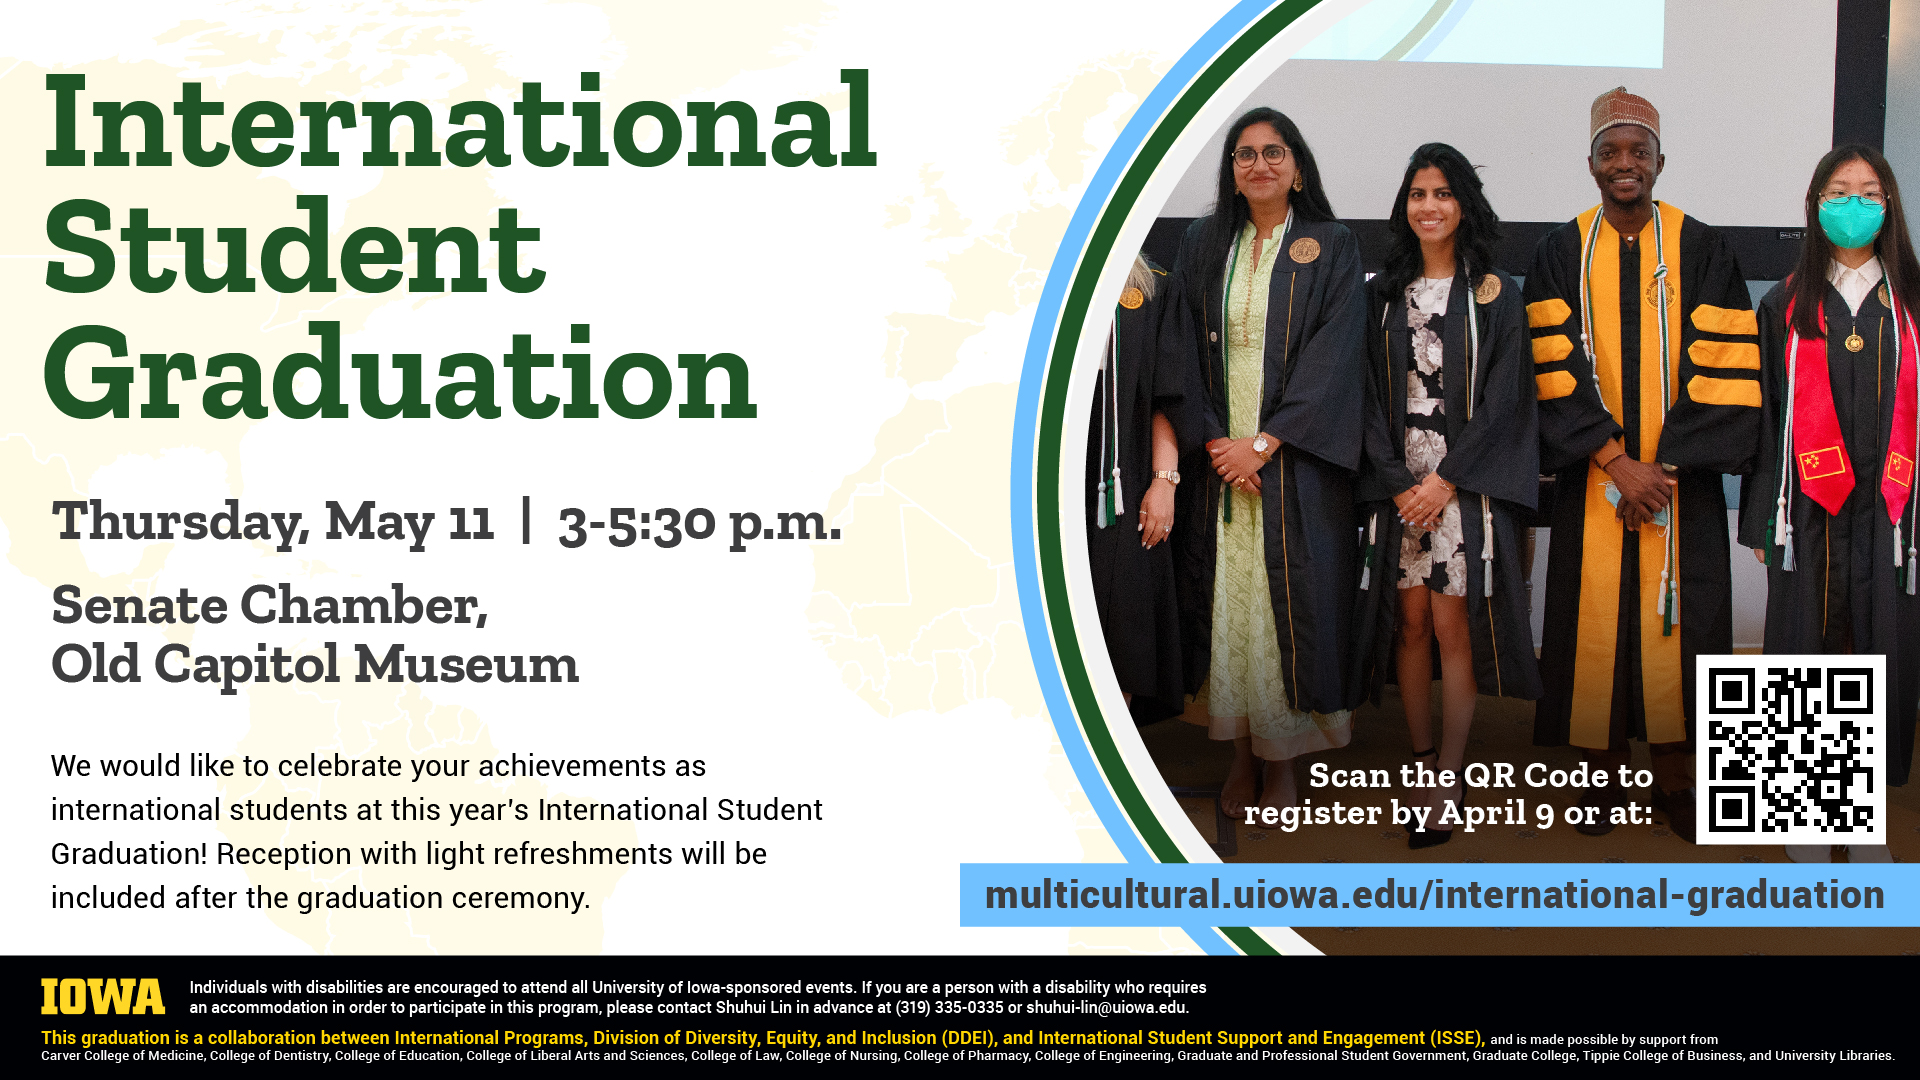 International Student Graduation Thursday, May 11 3-5:30pm